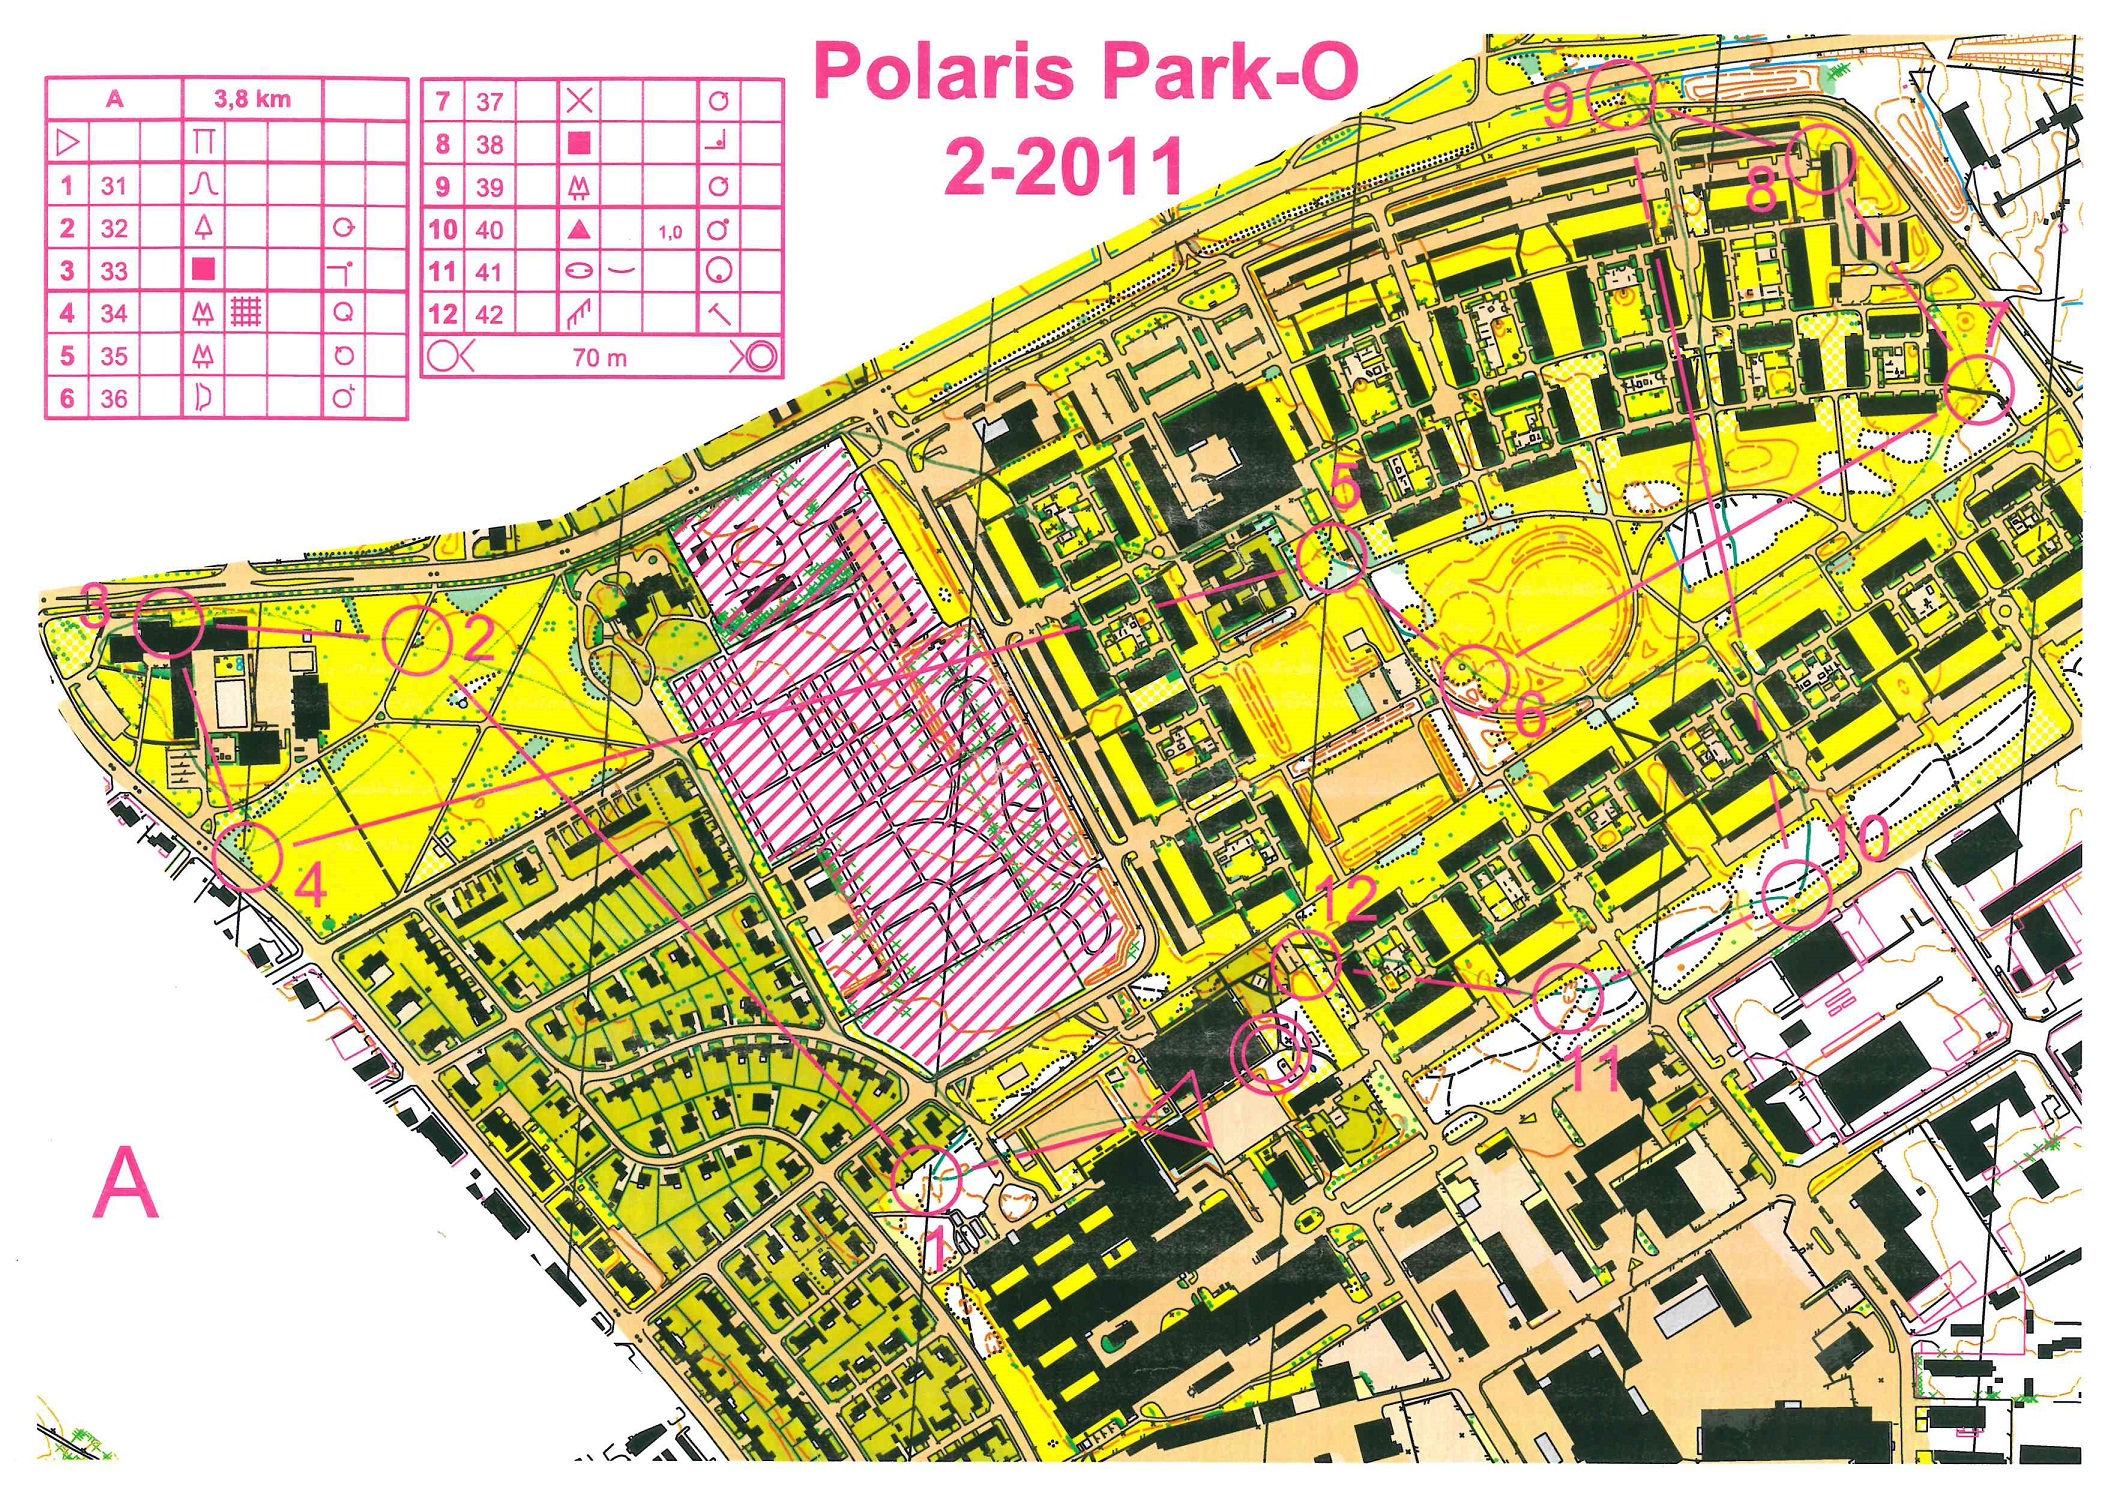 Polaris Sprint Cup (27-04-2011)